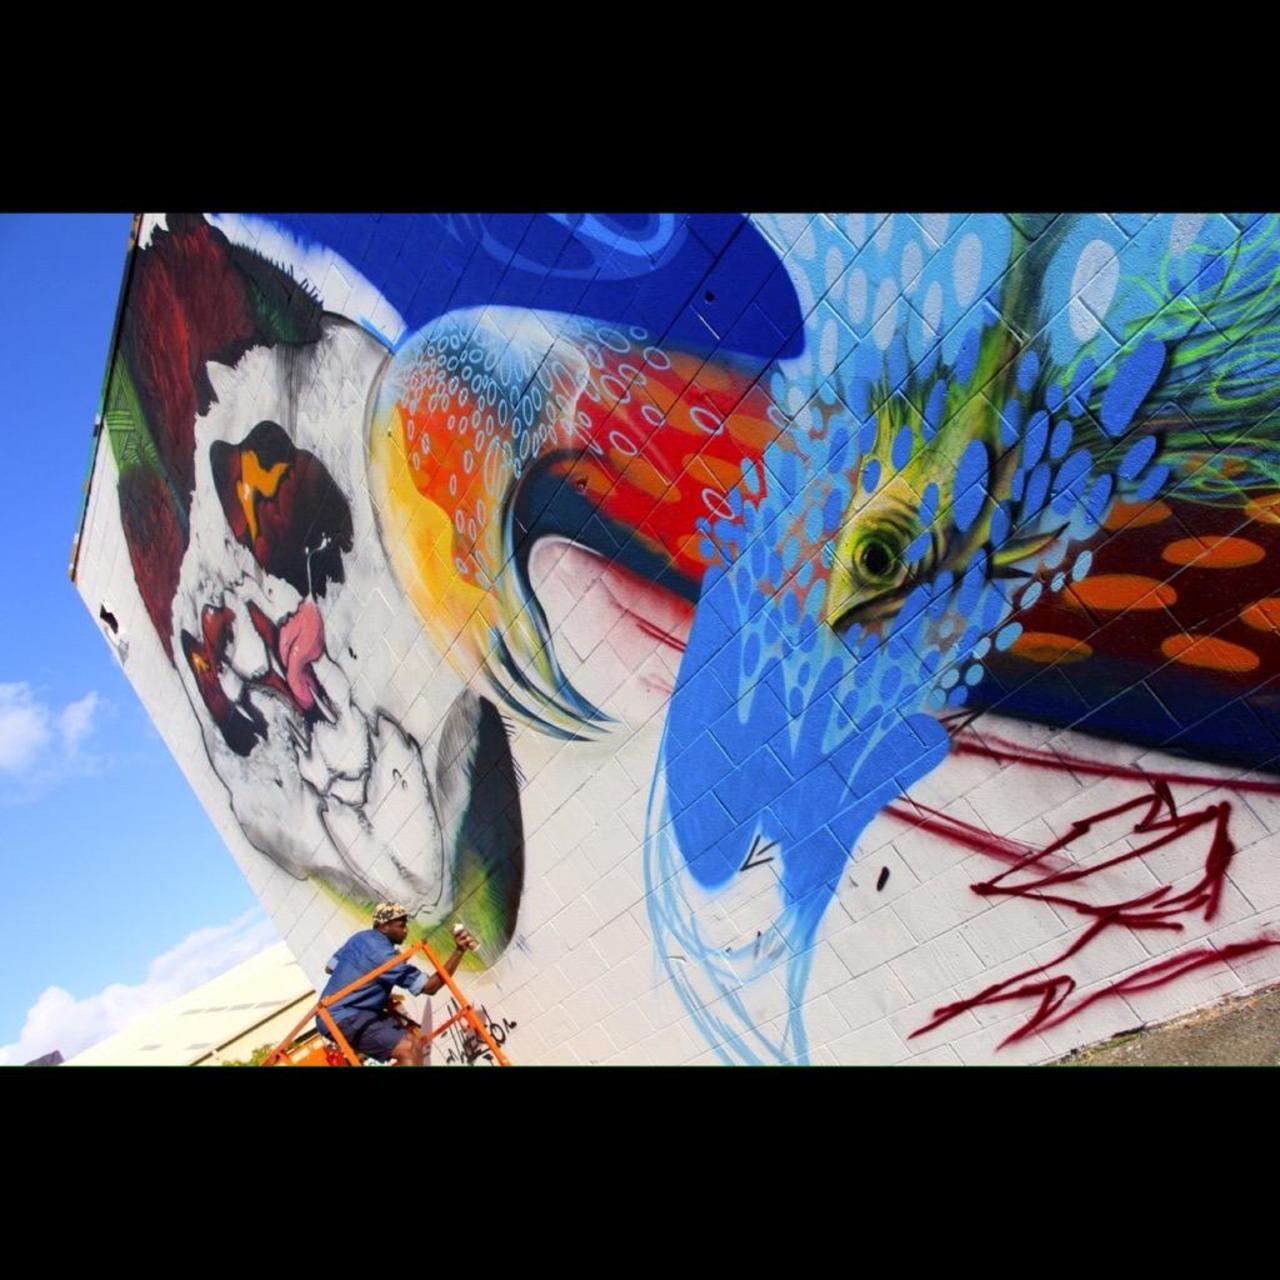 Mad #collab by @NoseGo and @woeis in @POWWOWHAWAII ! (: @Enriqueta2908 ) #graffiti #powwowhawaii #mural #urbanart http://t.co/hD4BLJcl2U